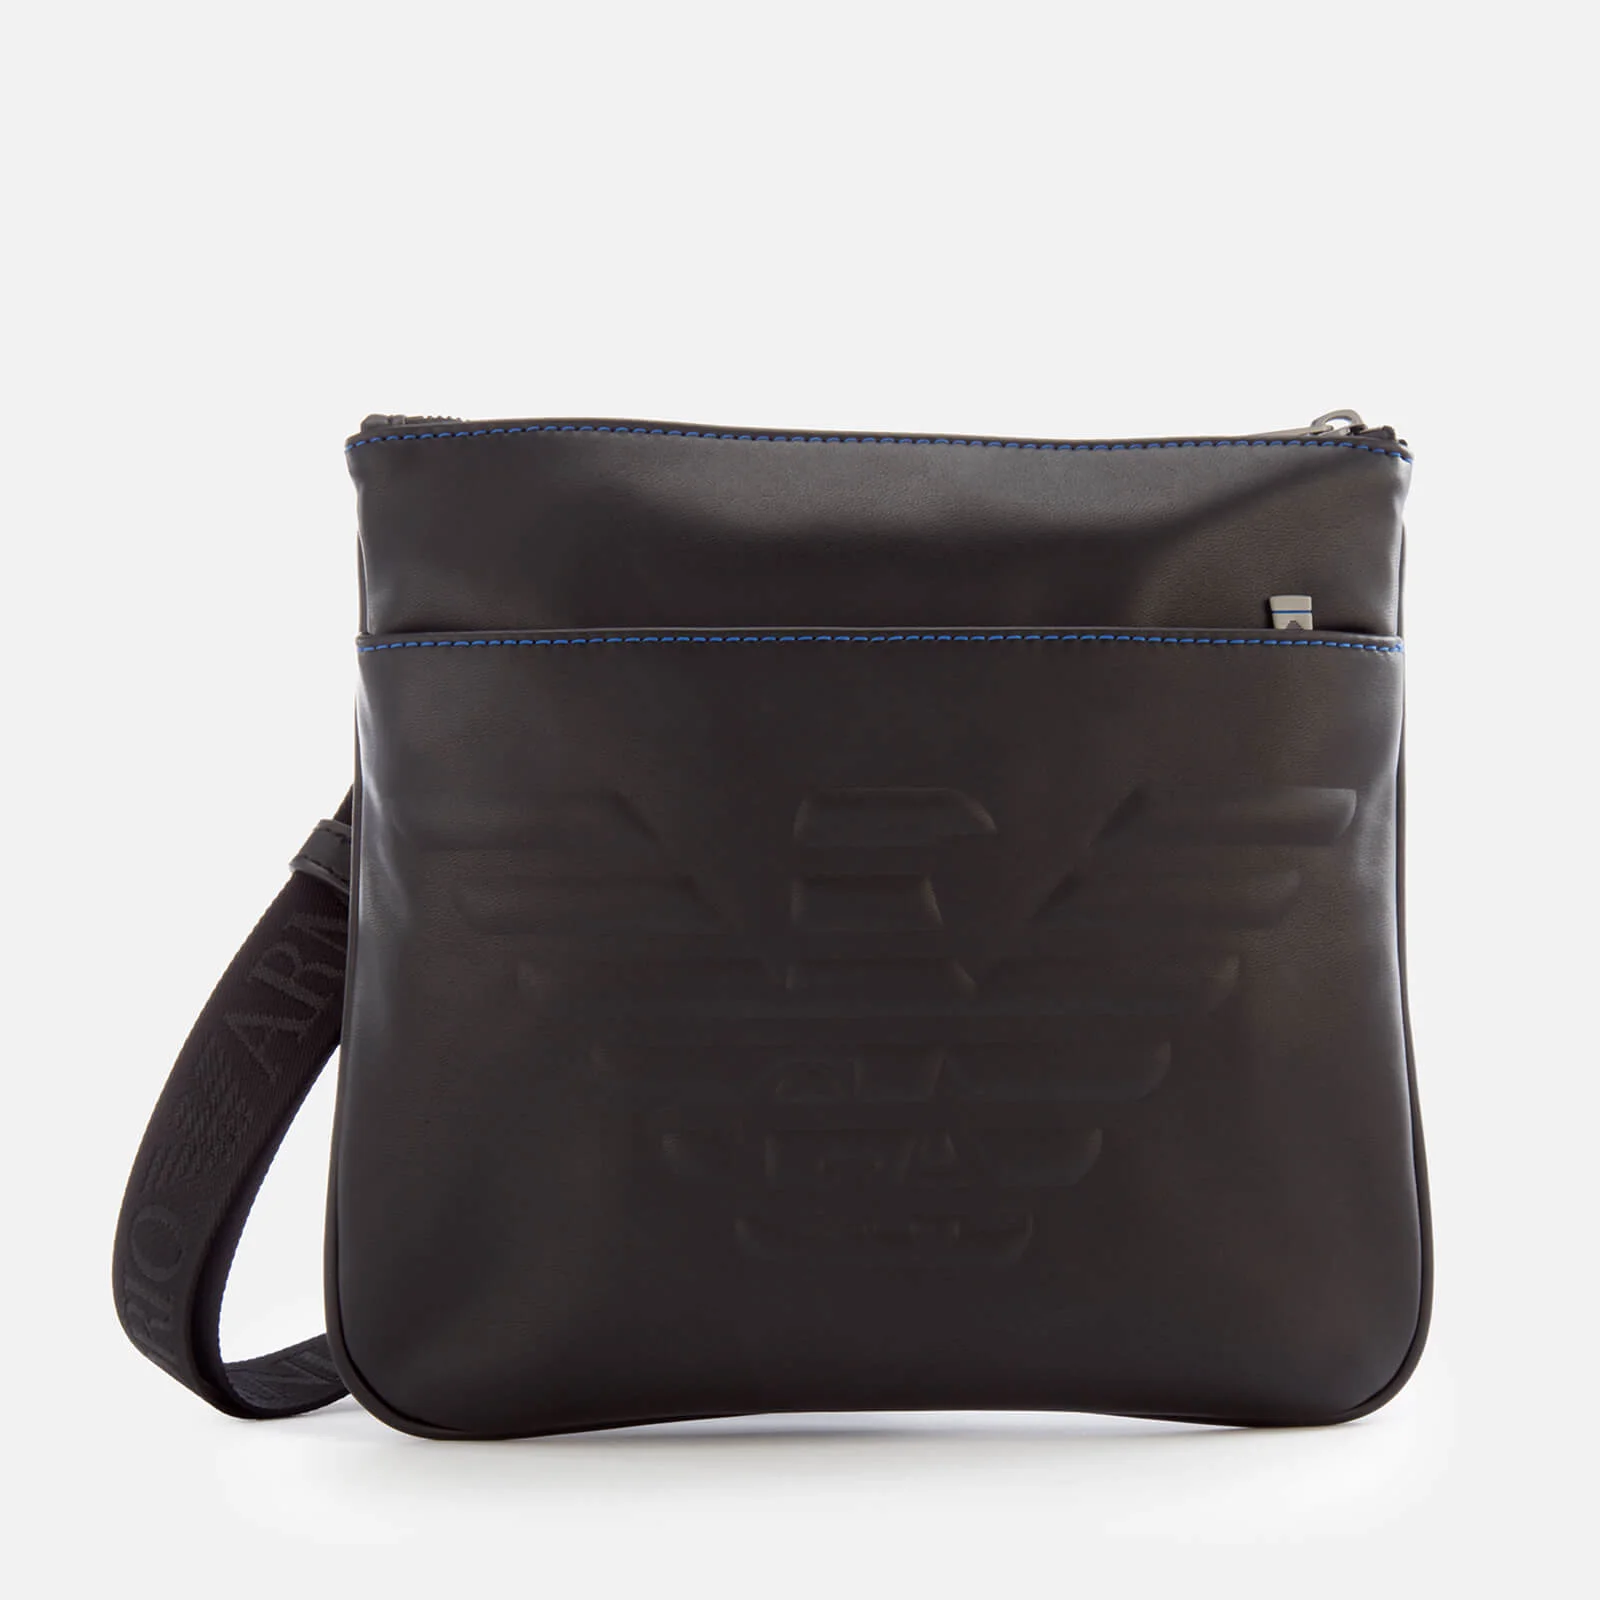 Emporio Armani Men's Flat Messenger Bag - Black Image 1